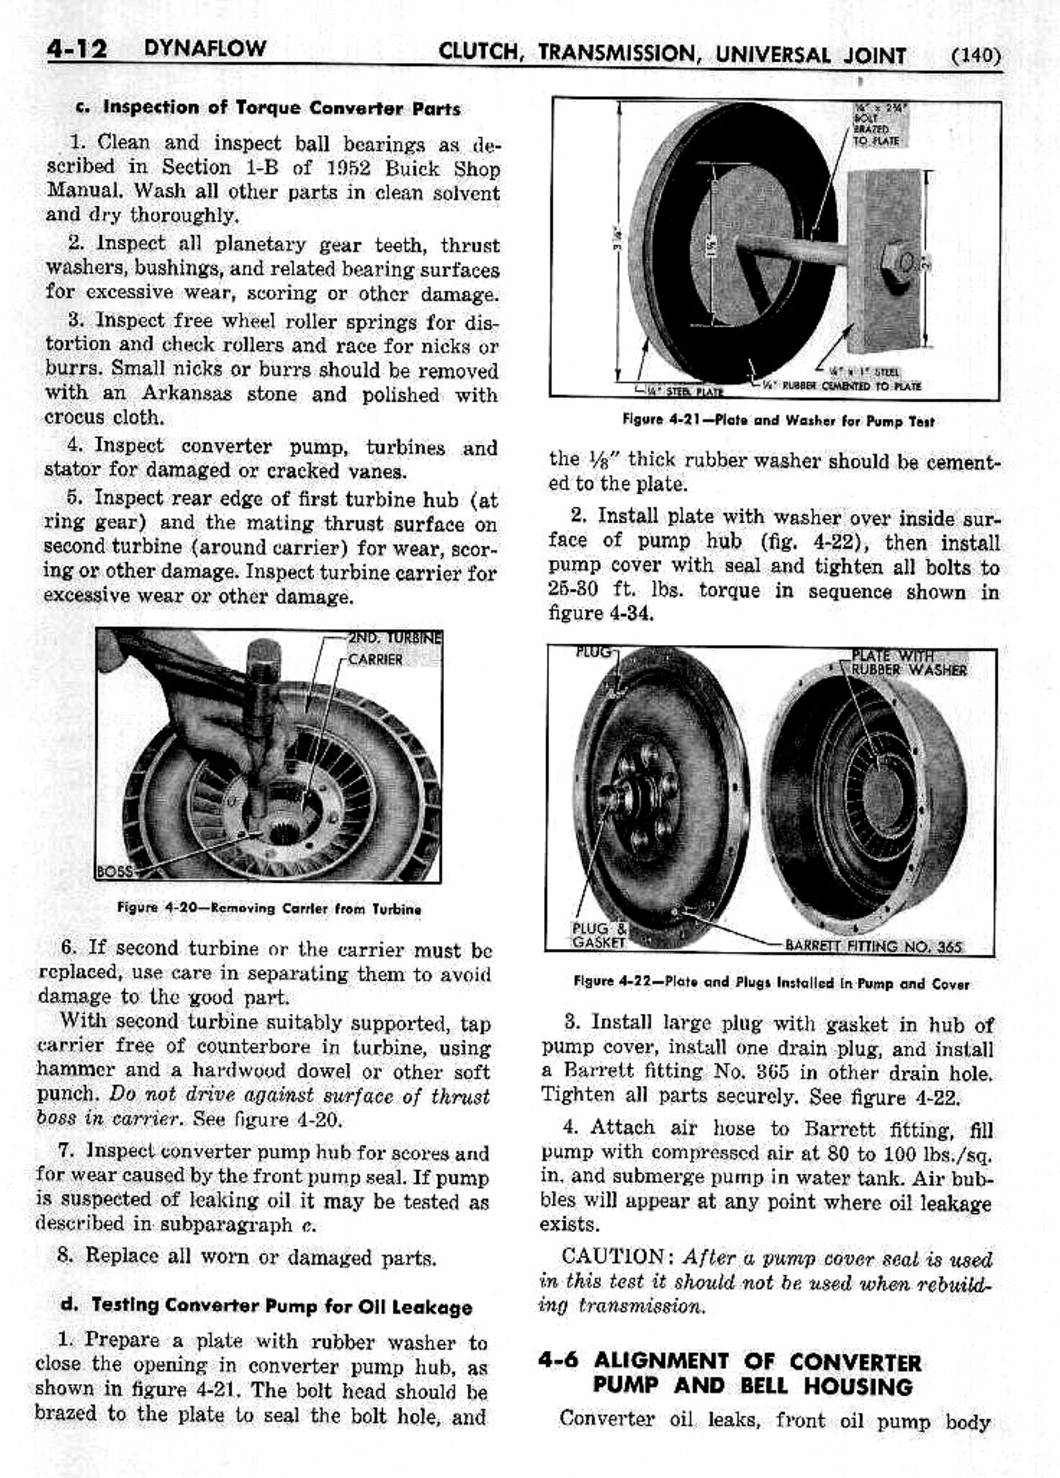 n_05 1953 Buick Shop Manual - Transmission-012-012.jpg